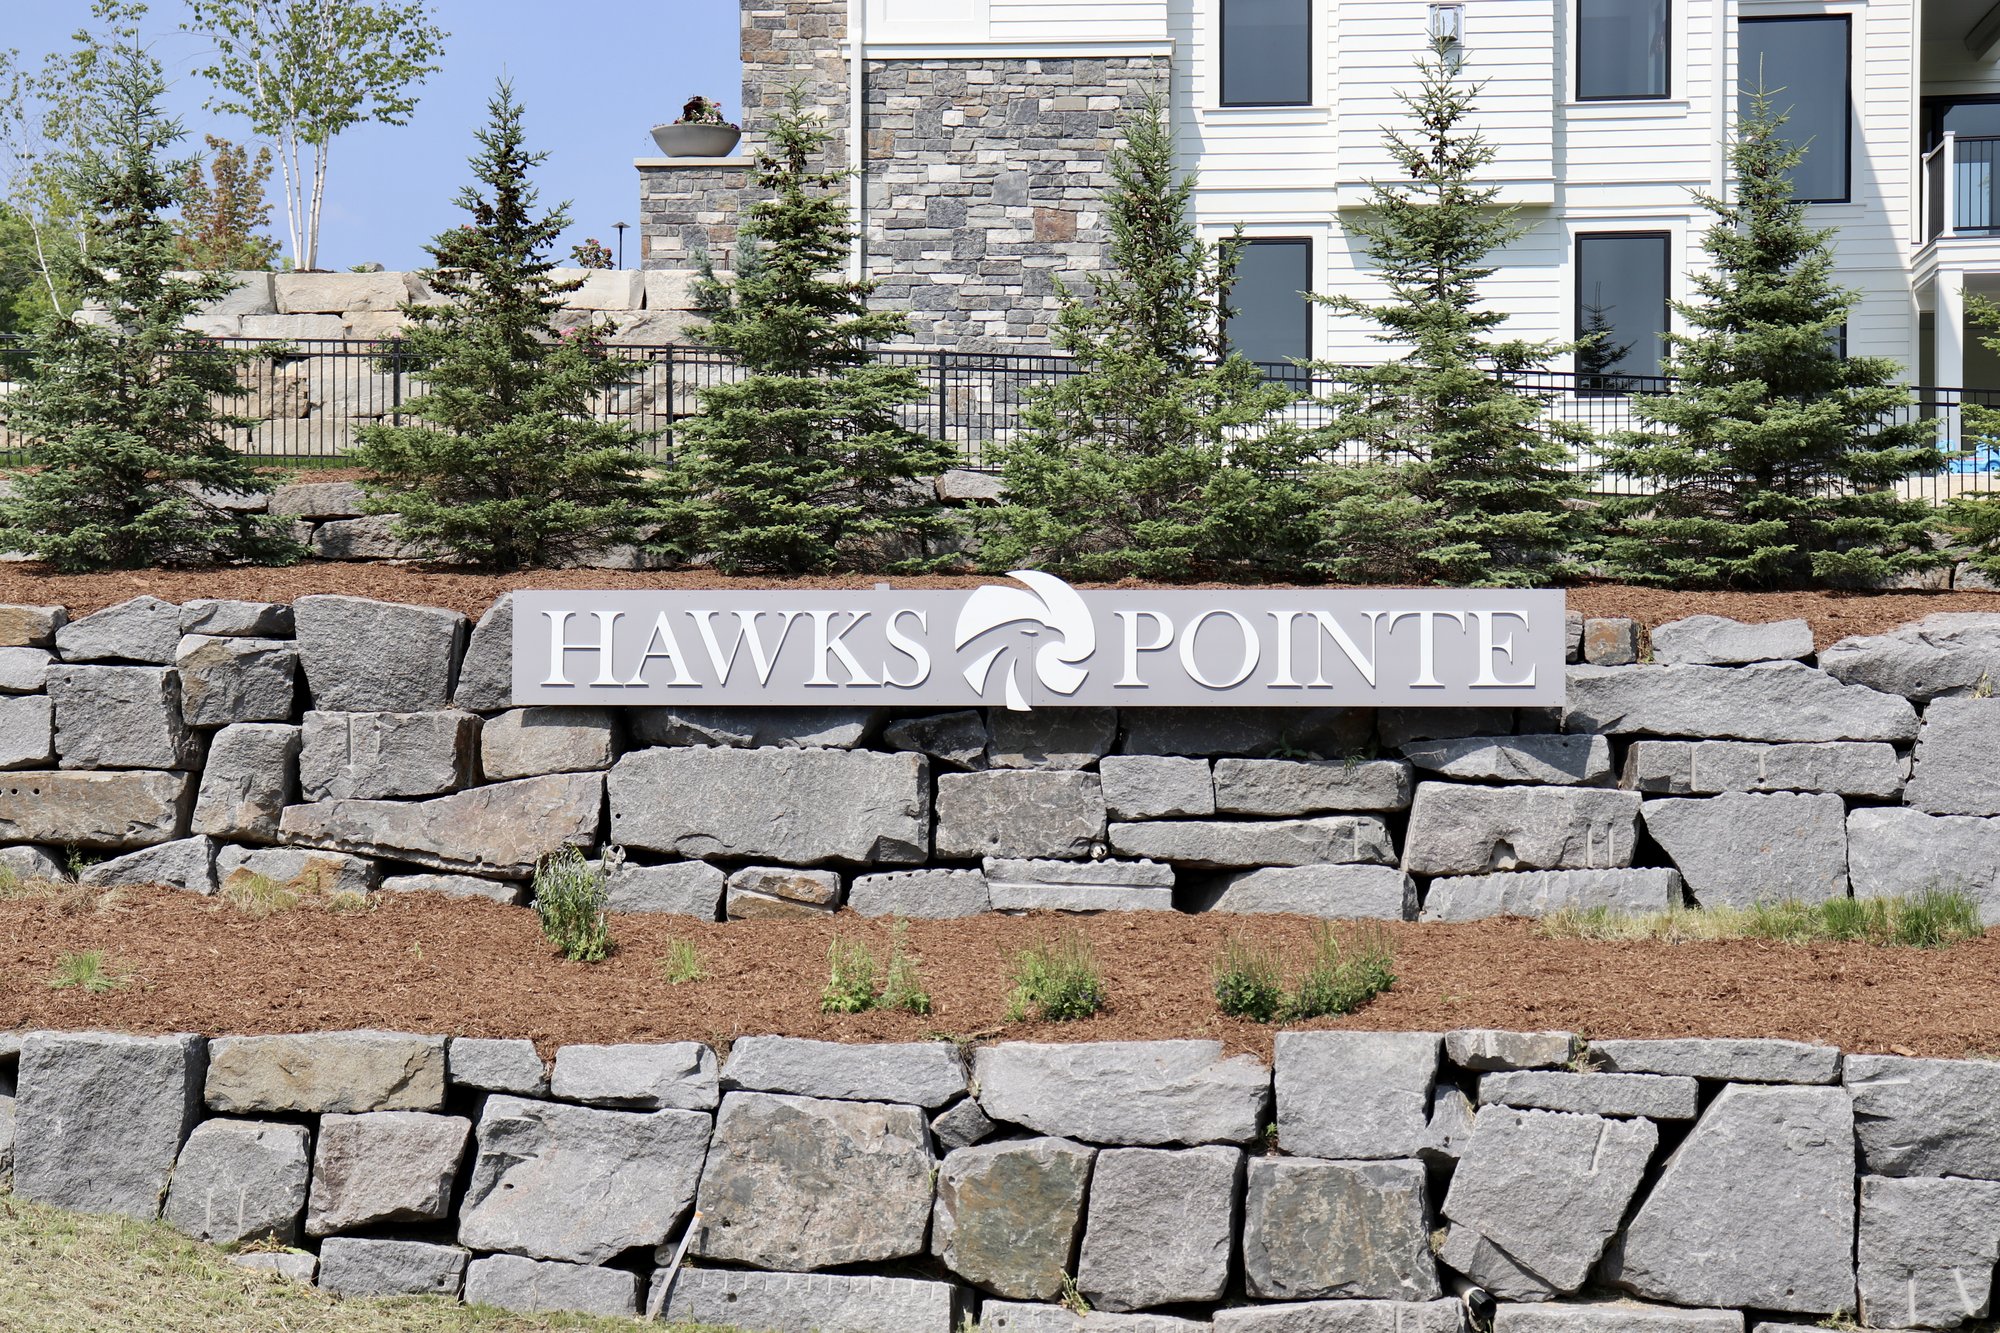 Hawks Pointe